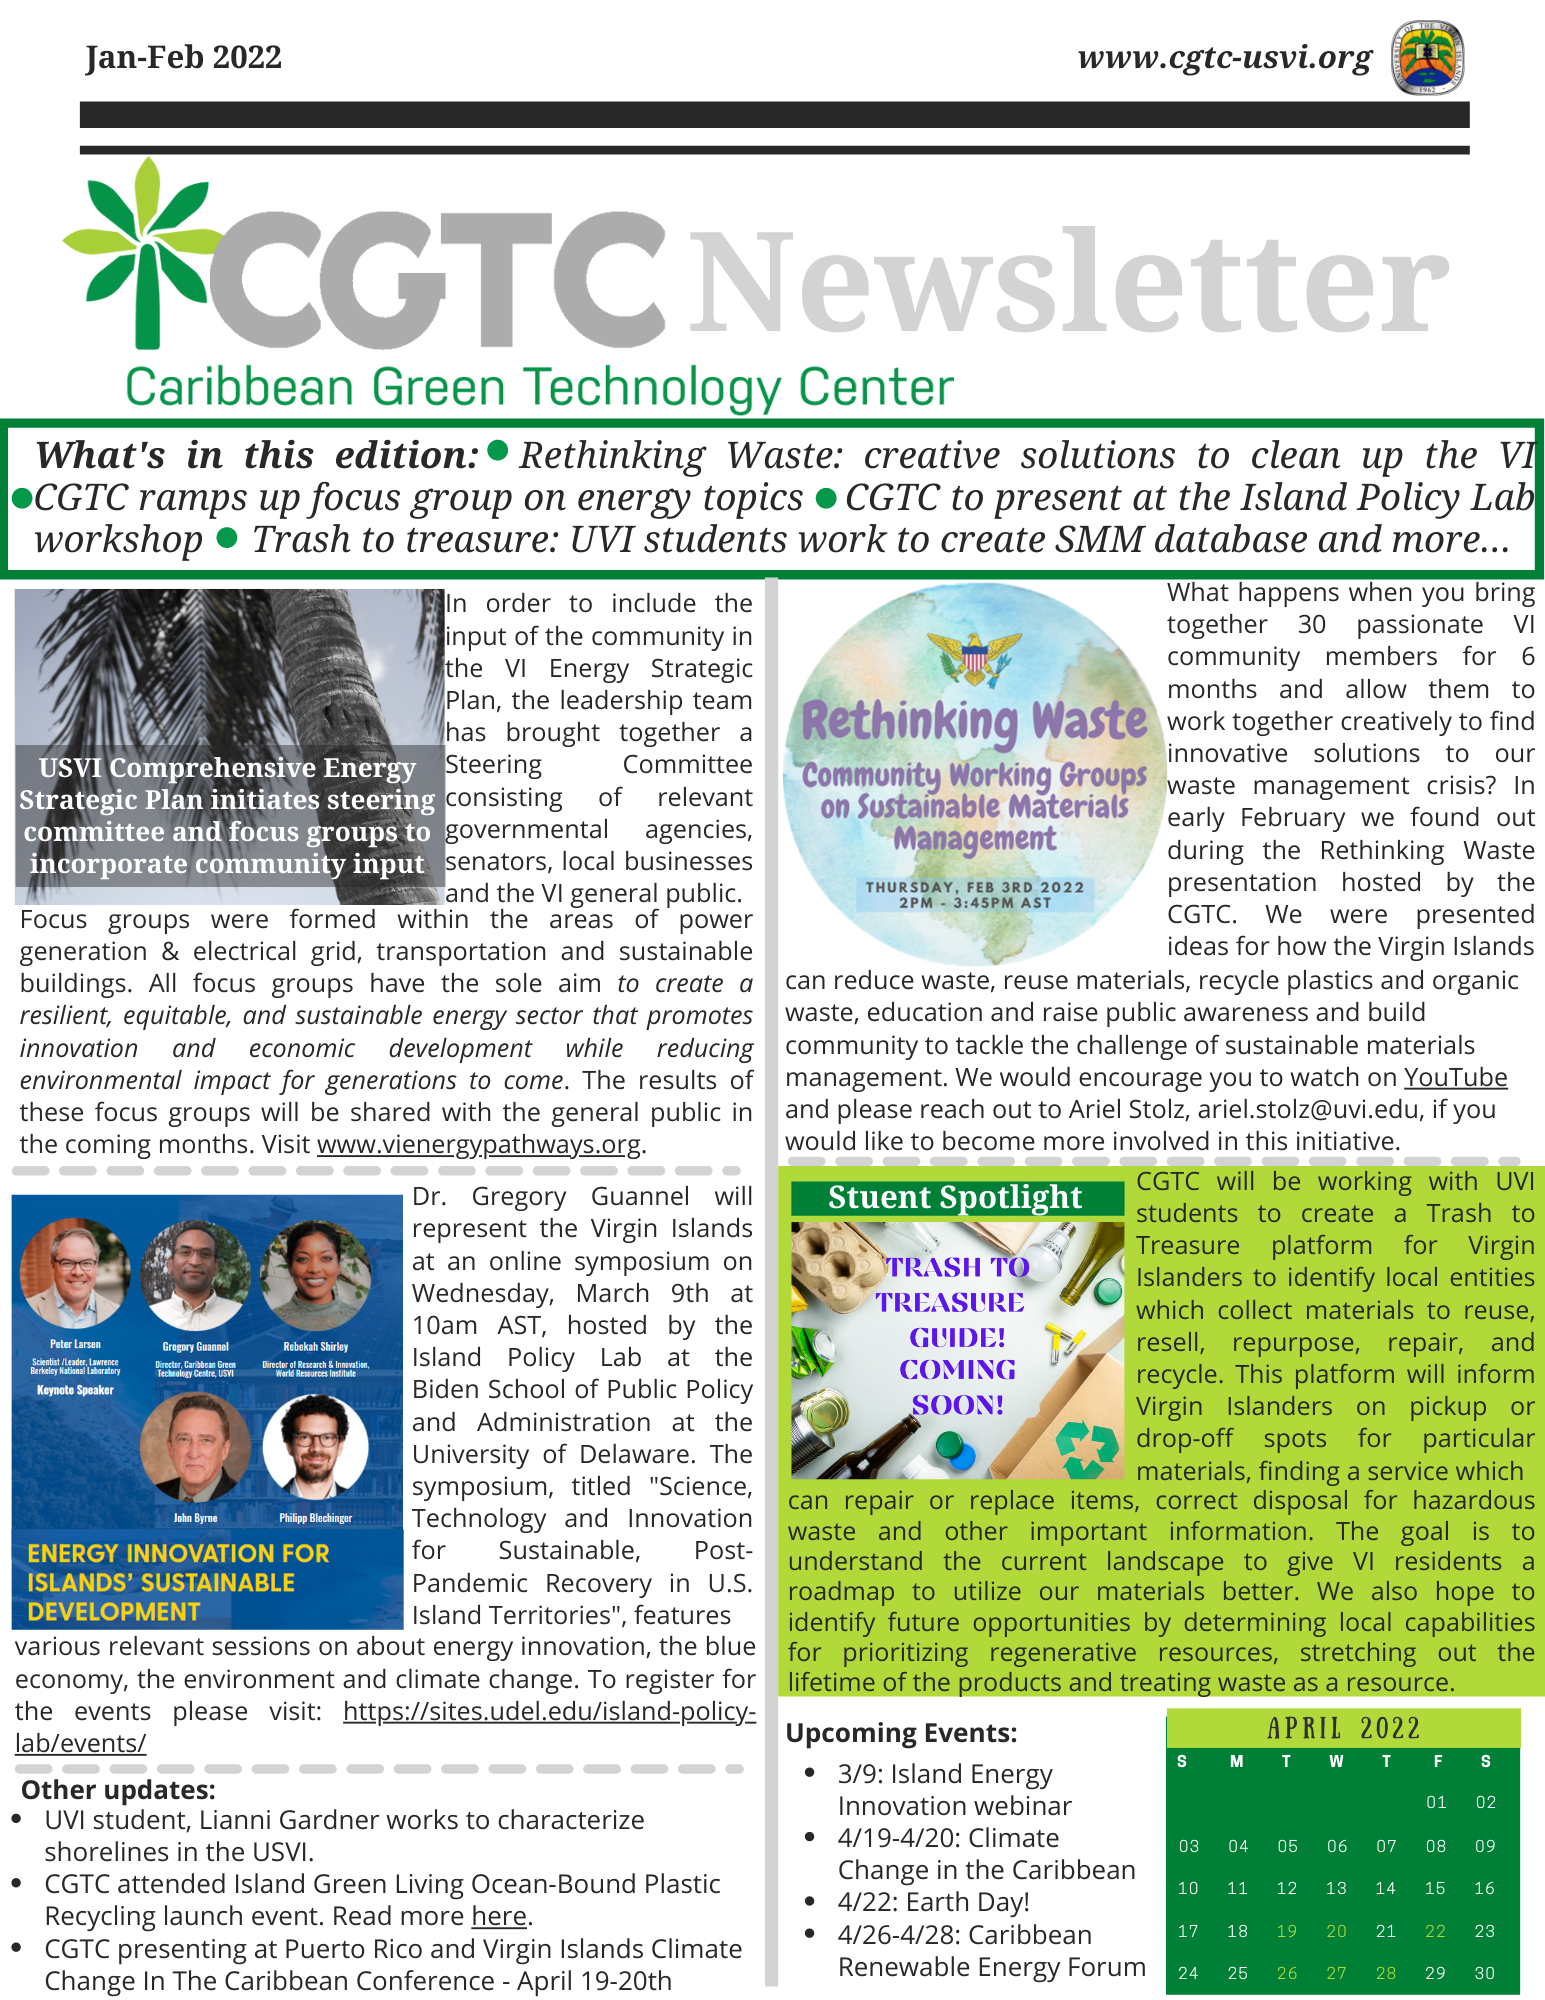 CGTC Newsletter Jan-Feb 2022